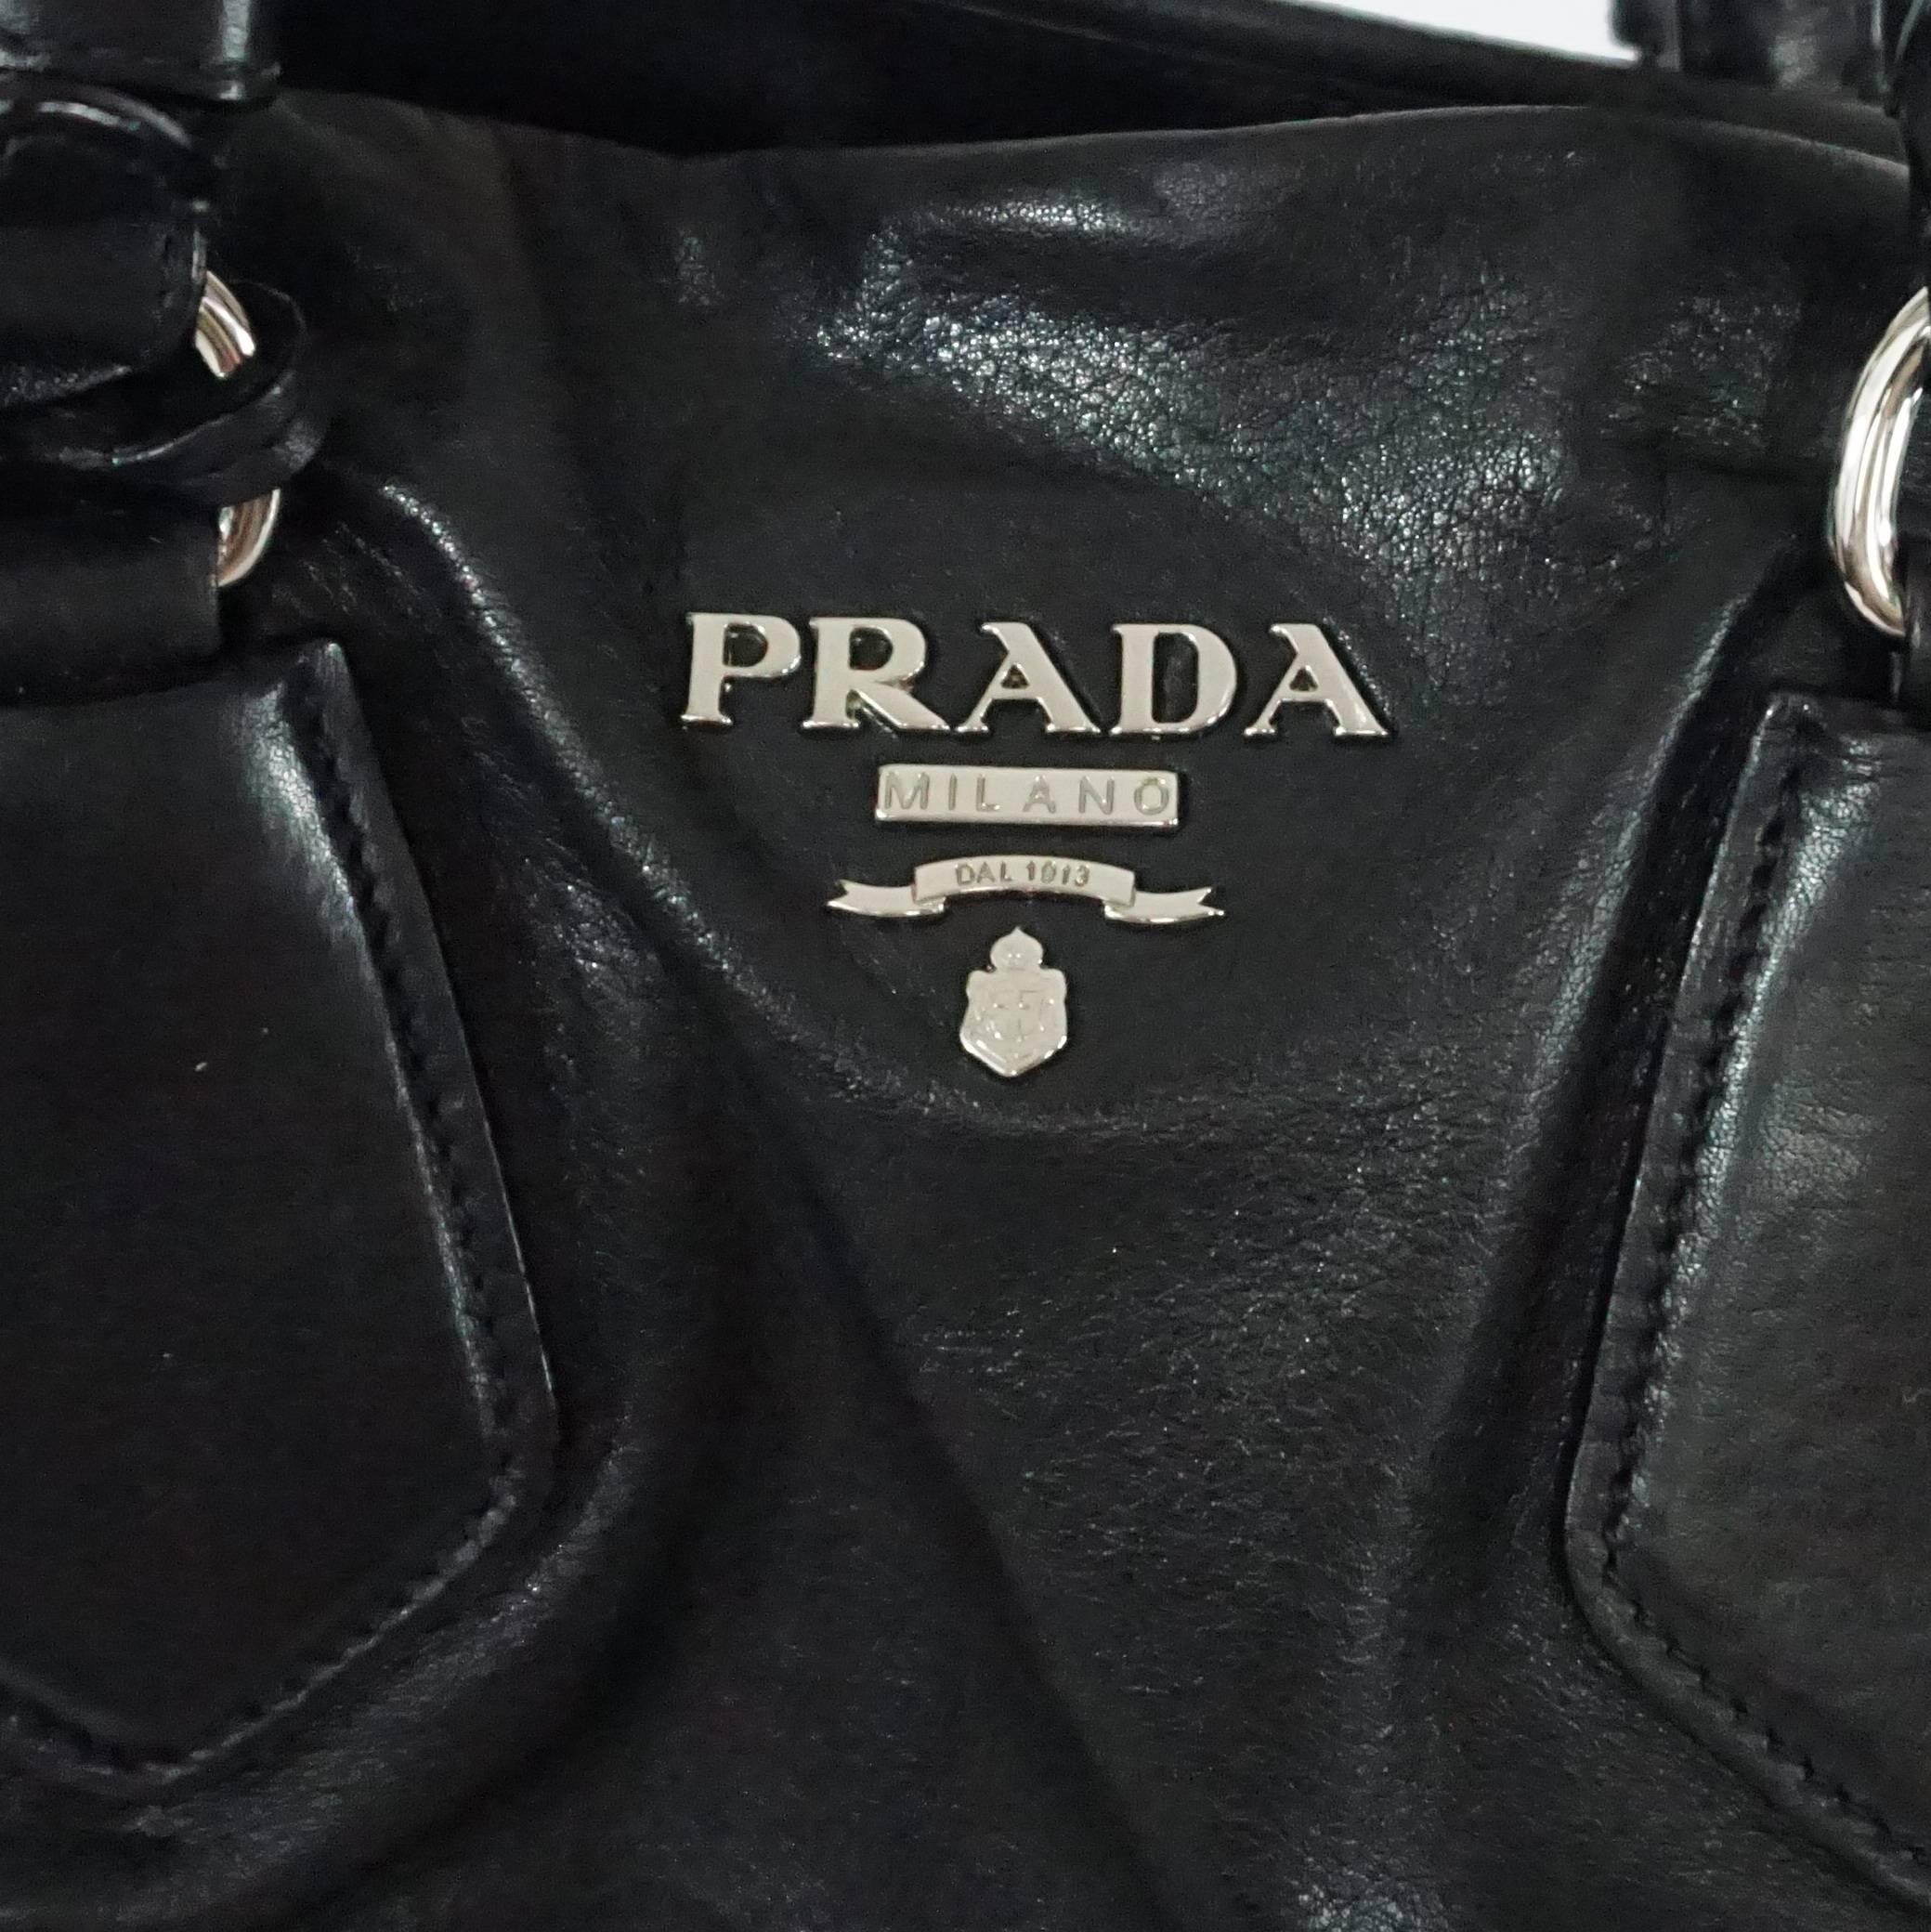 Prada Black Leather Shoulder Bag with Crossbody Strap and Charm - SHW - 1